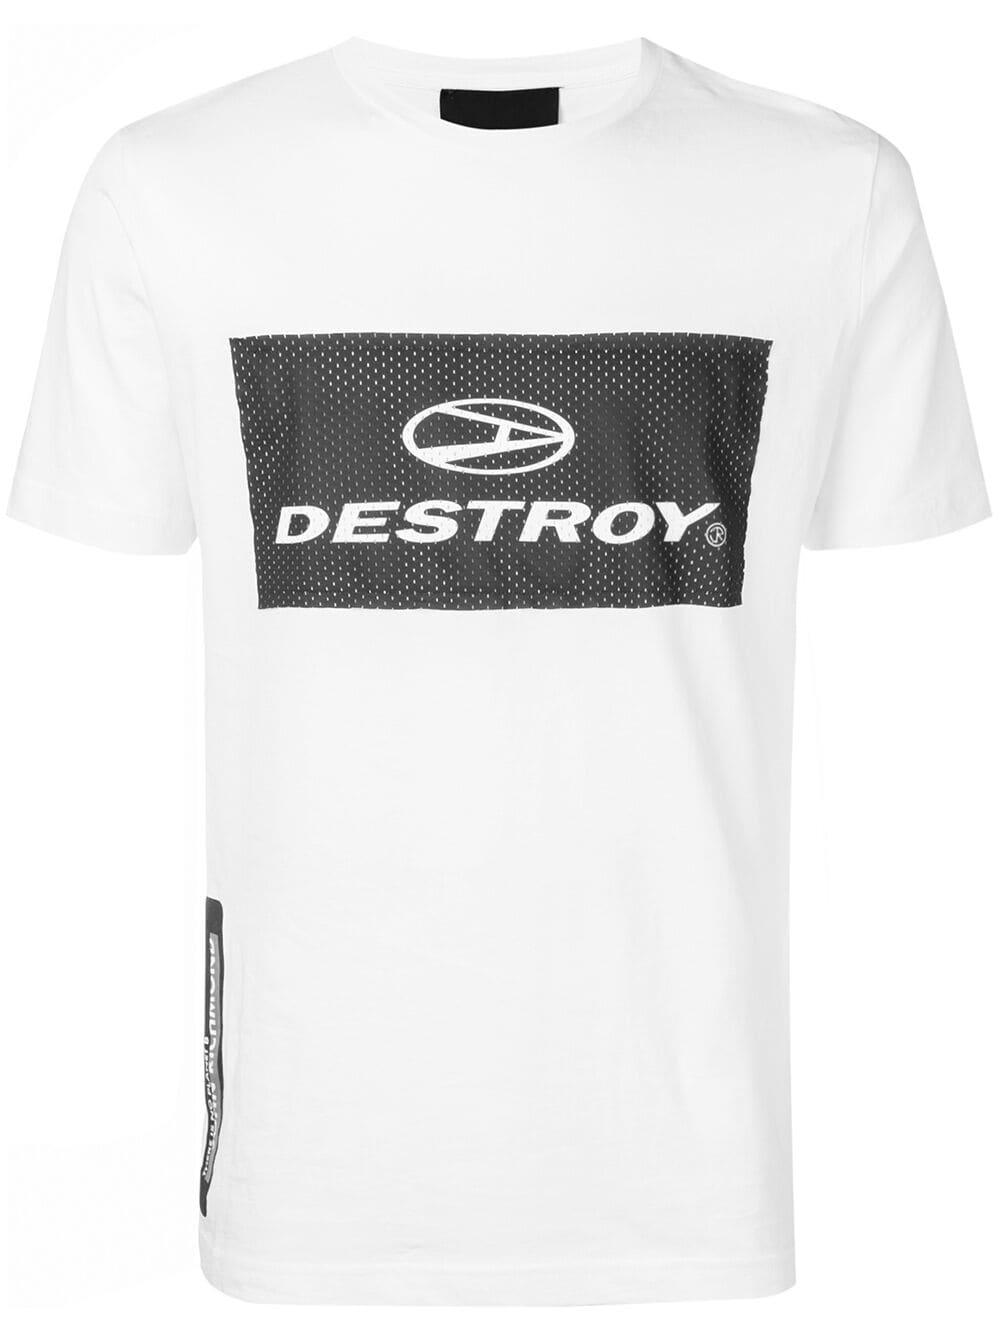 John Richmond Cotton Destroy T-shirt in White for Men - Lyst